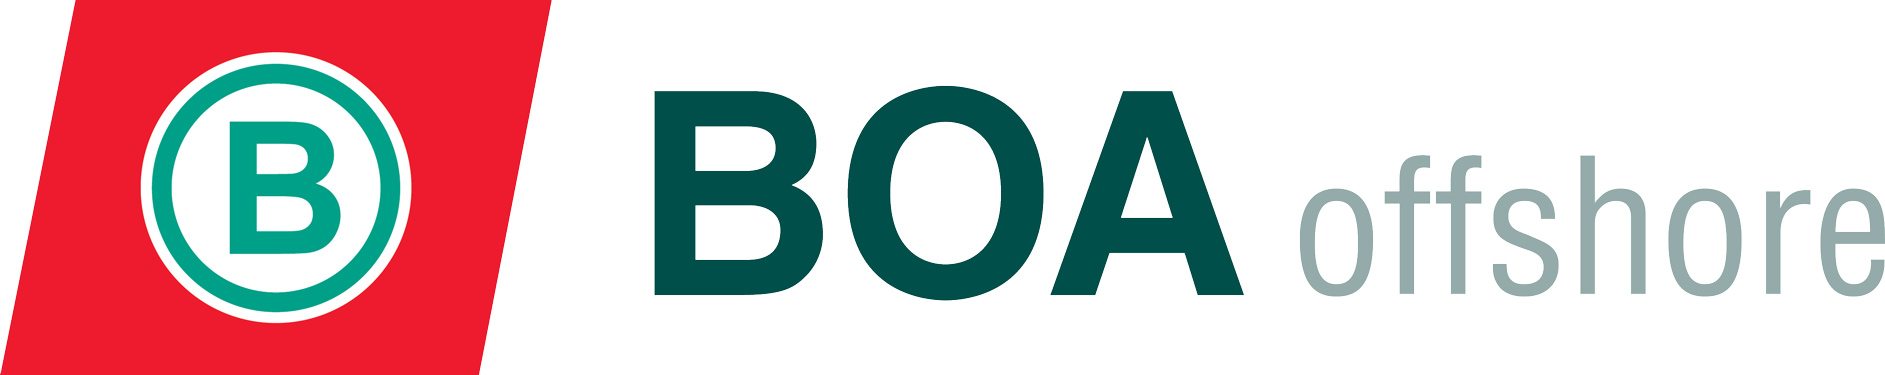 BOA_Logo_offshore_plain